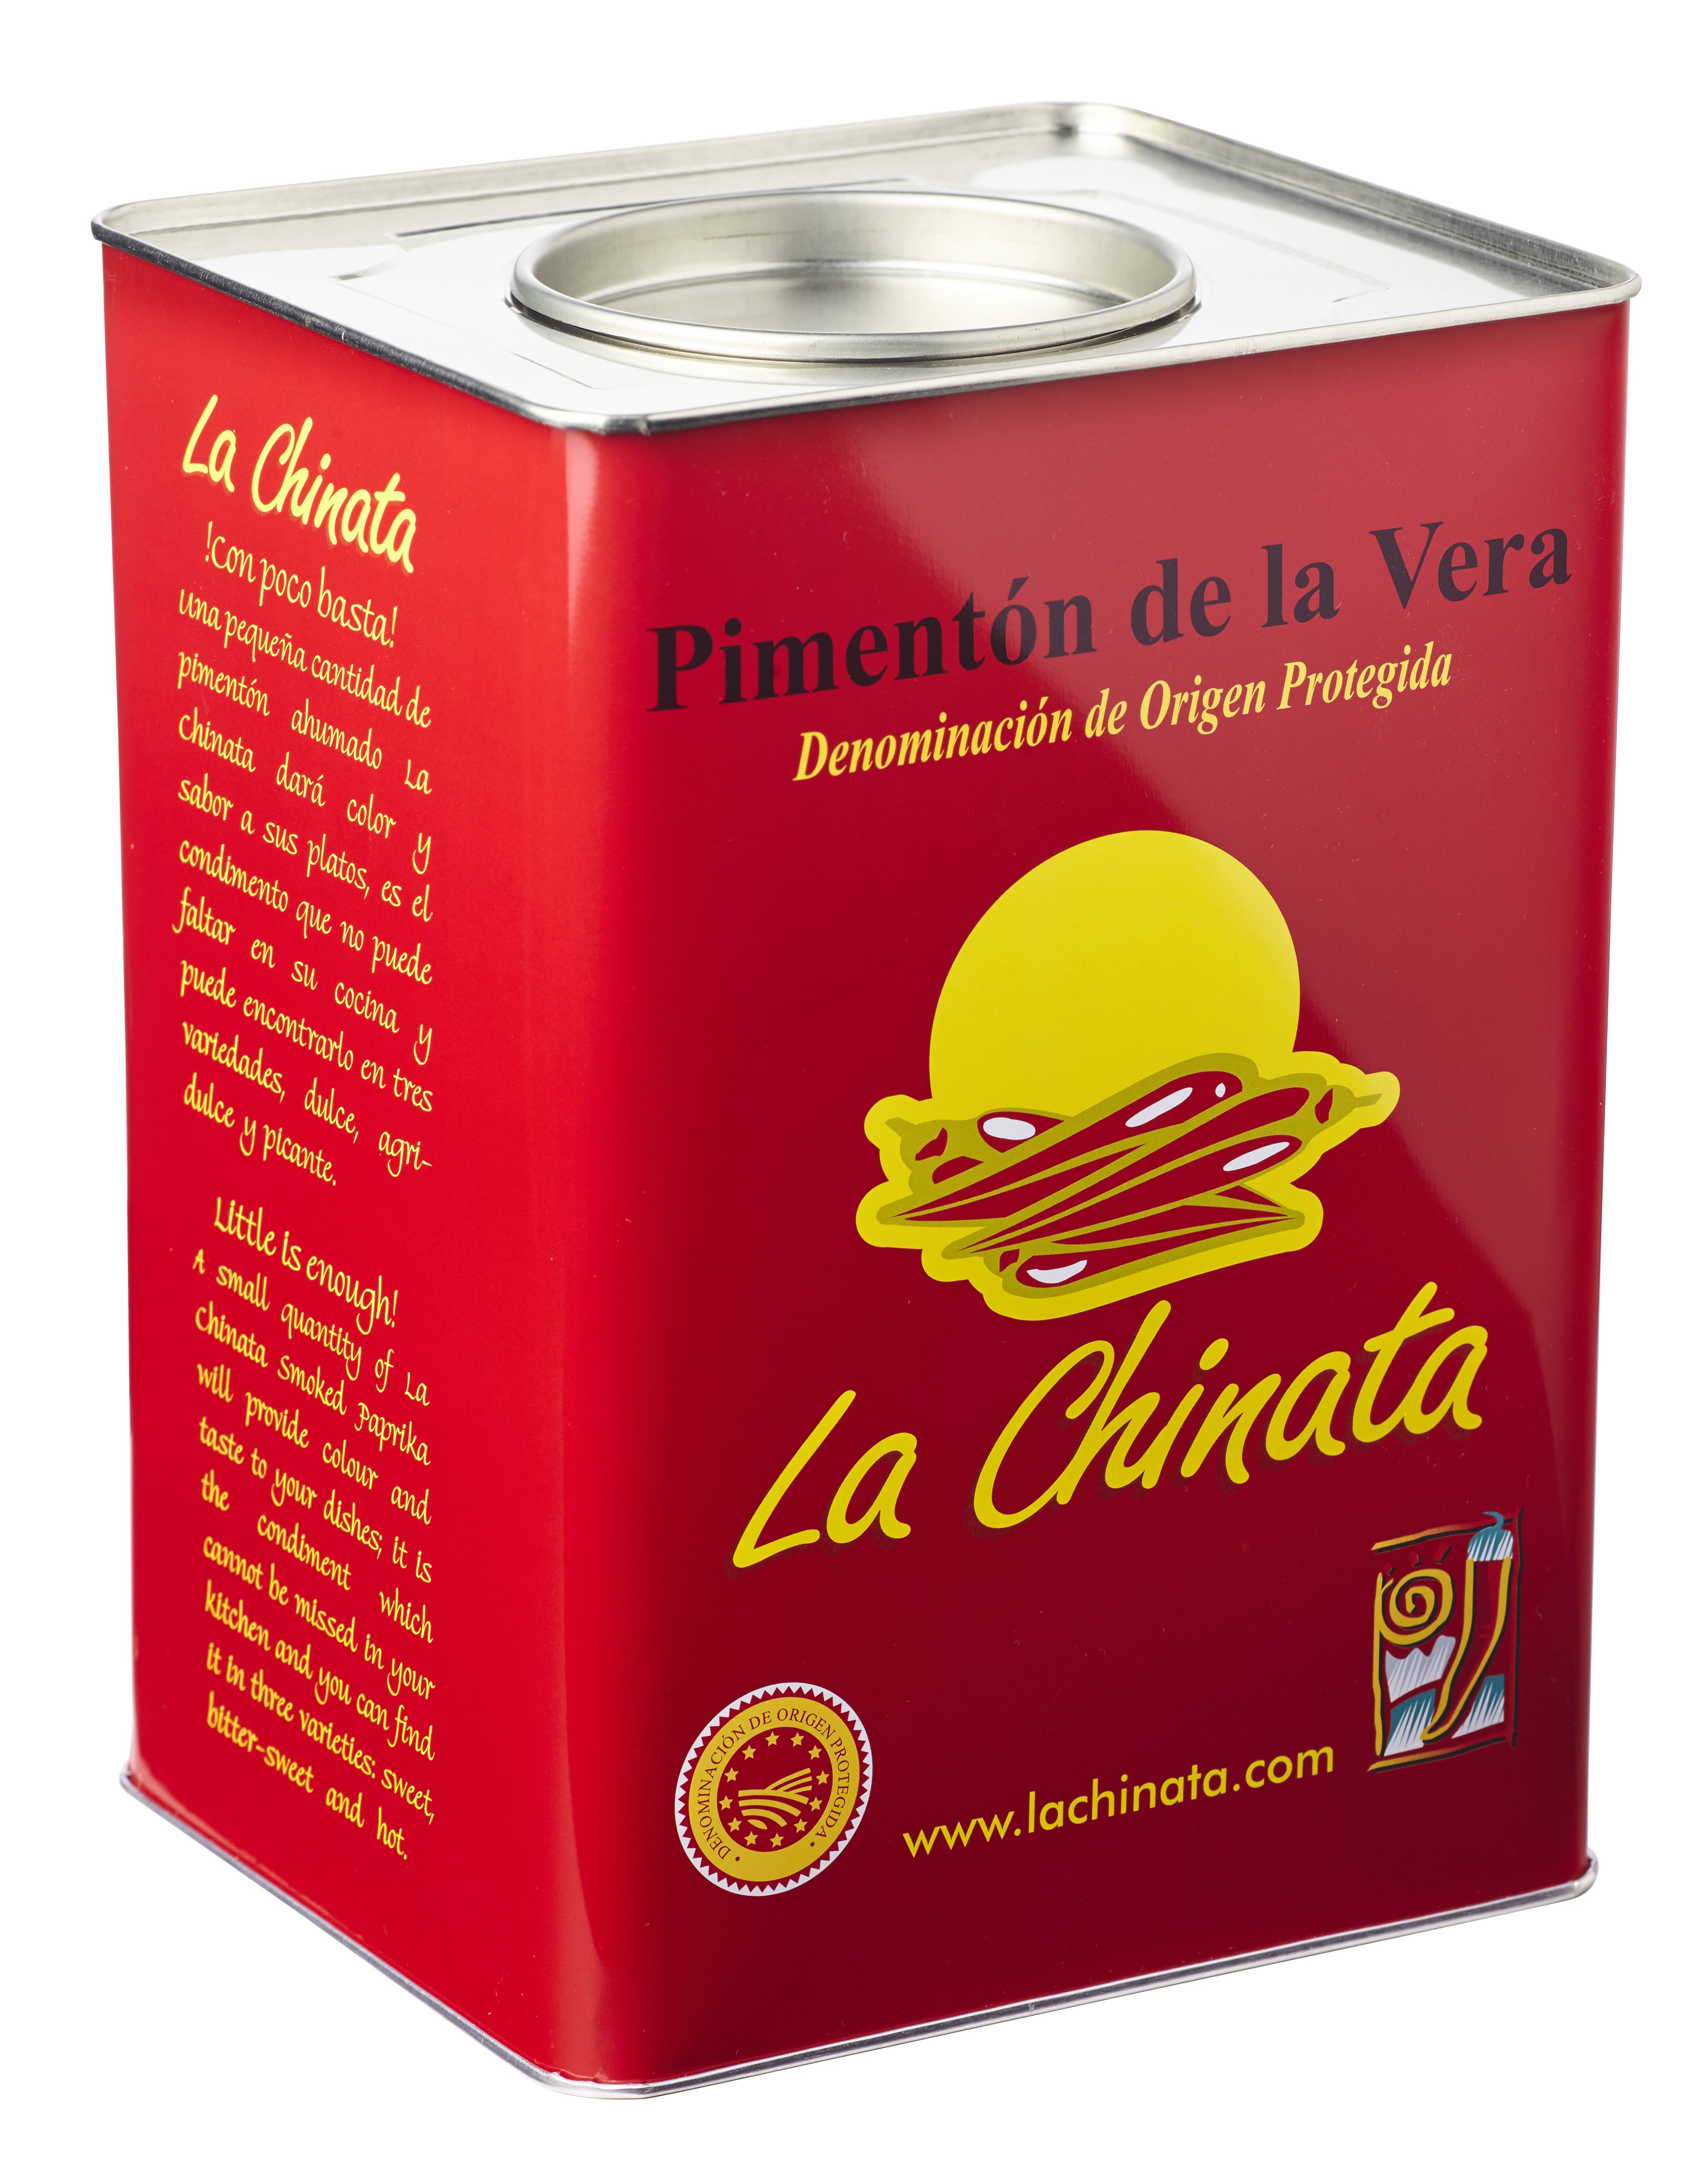 Sweet Smoked Paprika Powder "La Chinata" 4,5 Kg. Tin